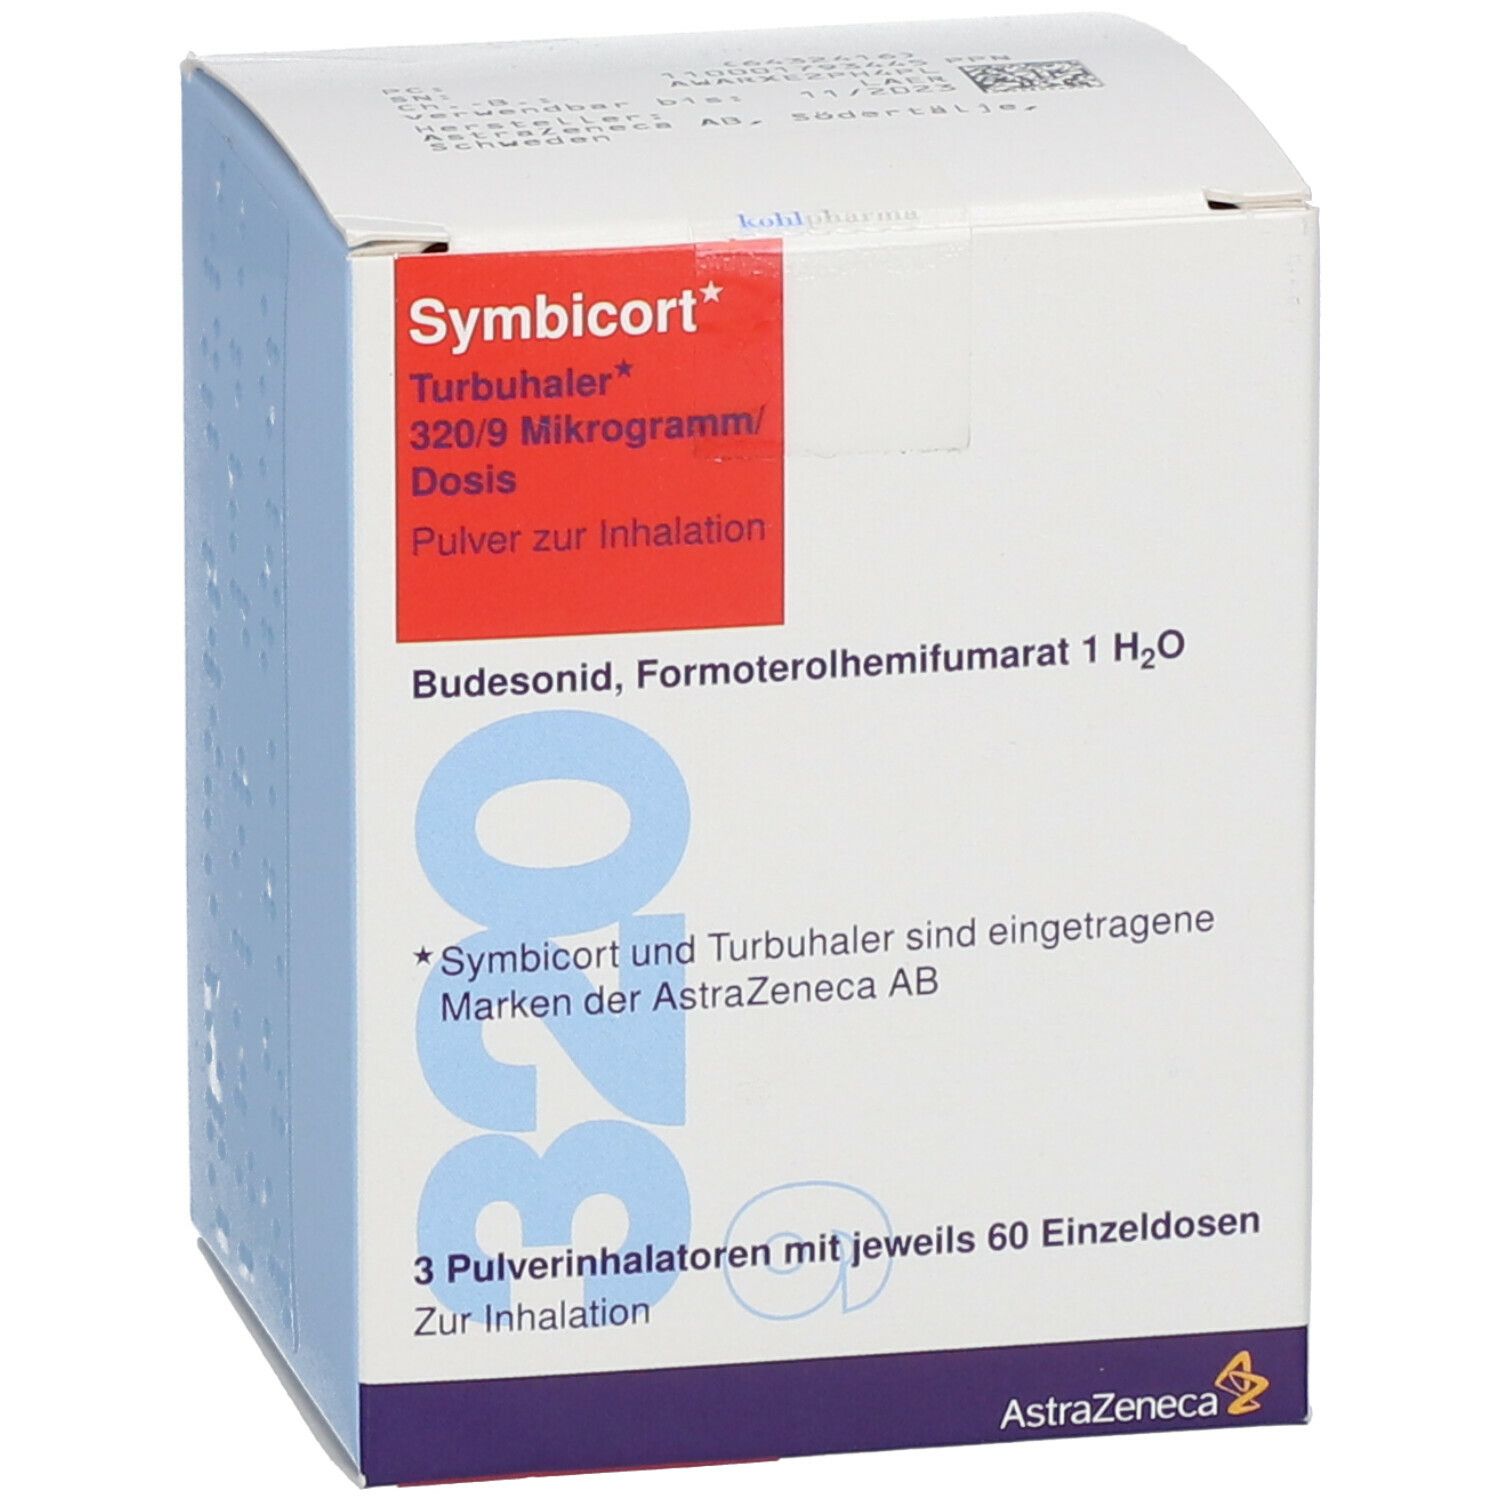 Symbicort Turbohaler 320/9 µg/Dosis 60 ED